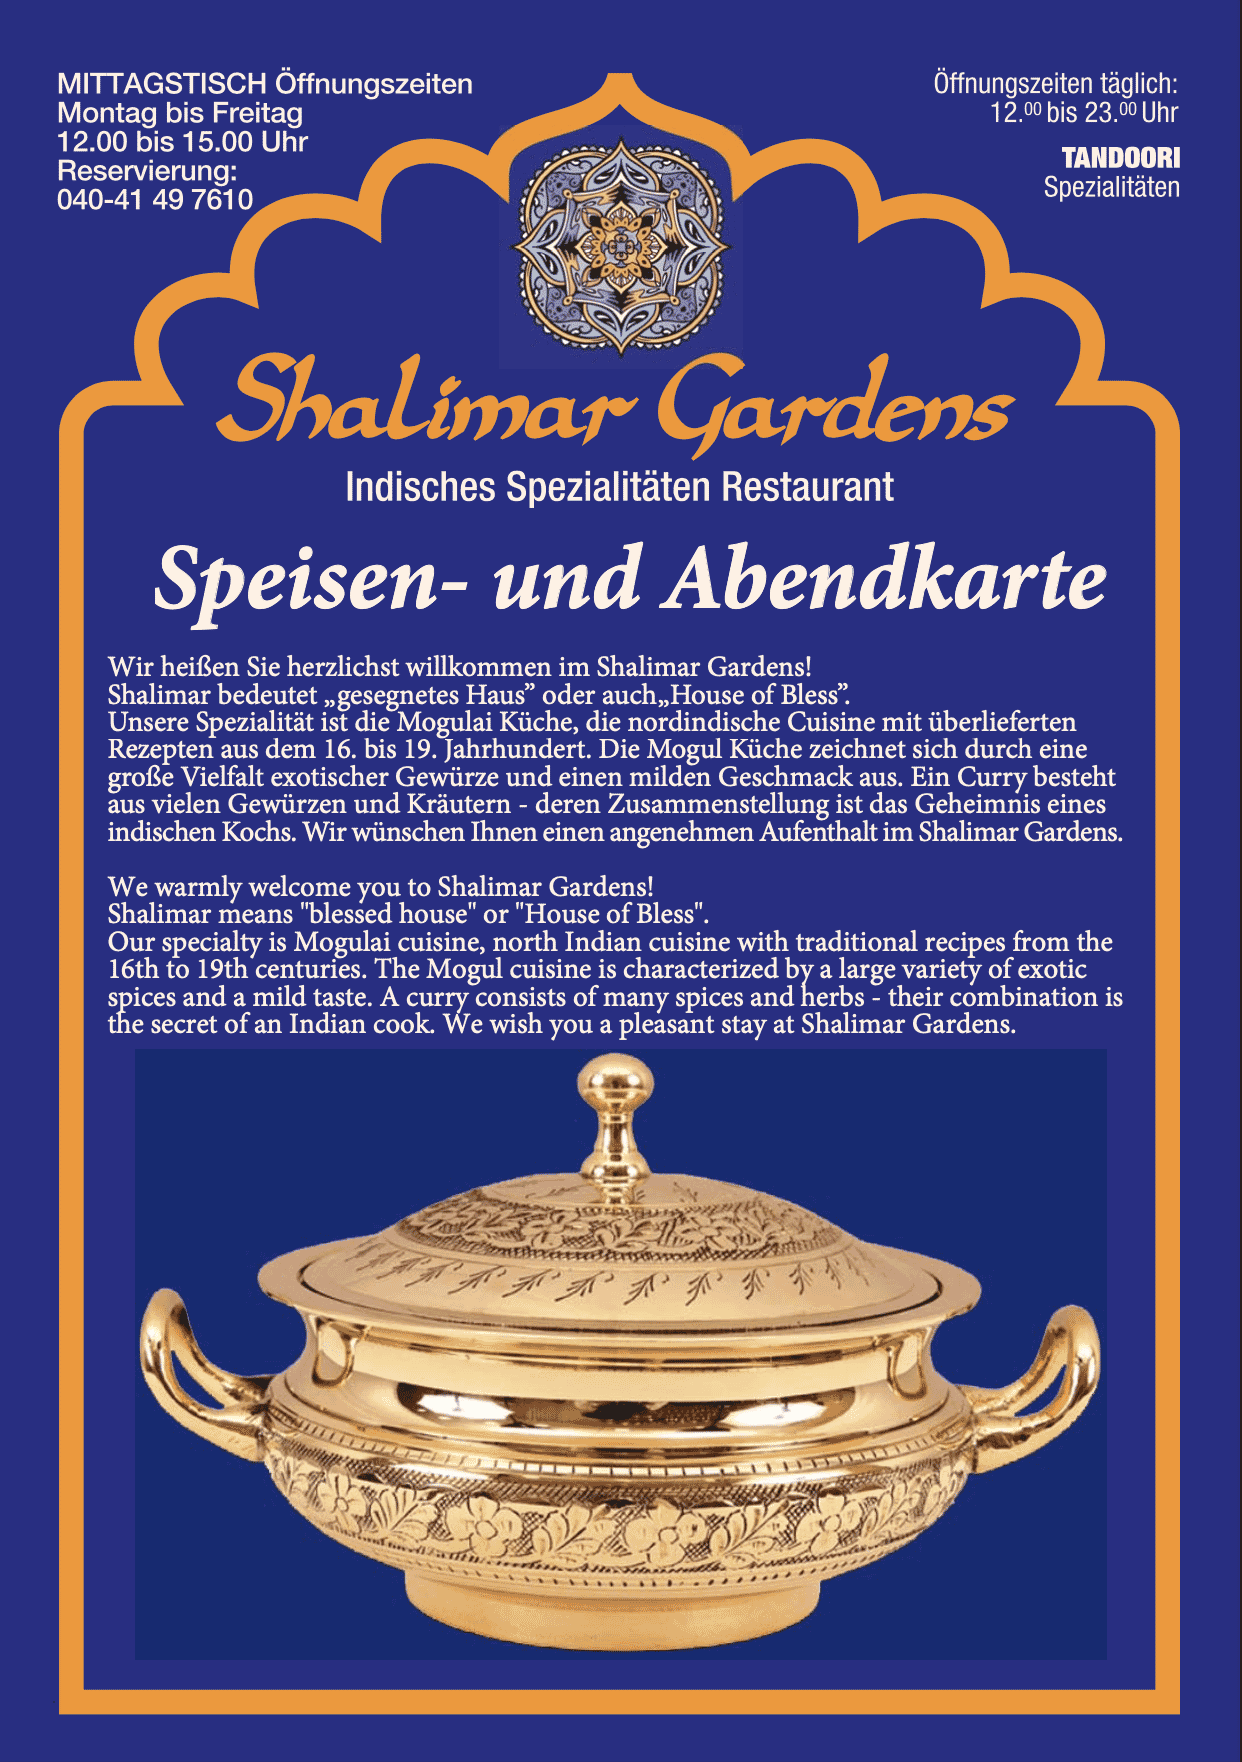 Abendkarte Shalimar Gardens